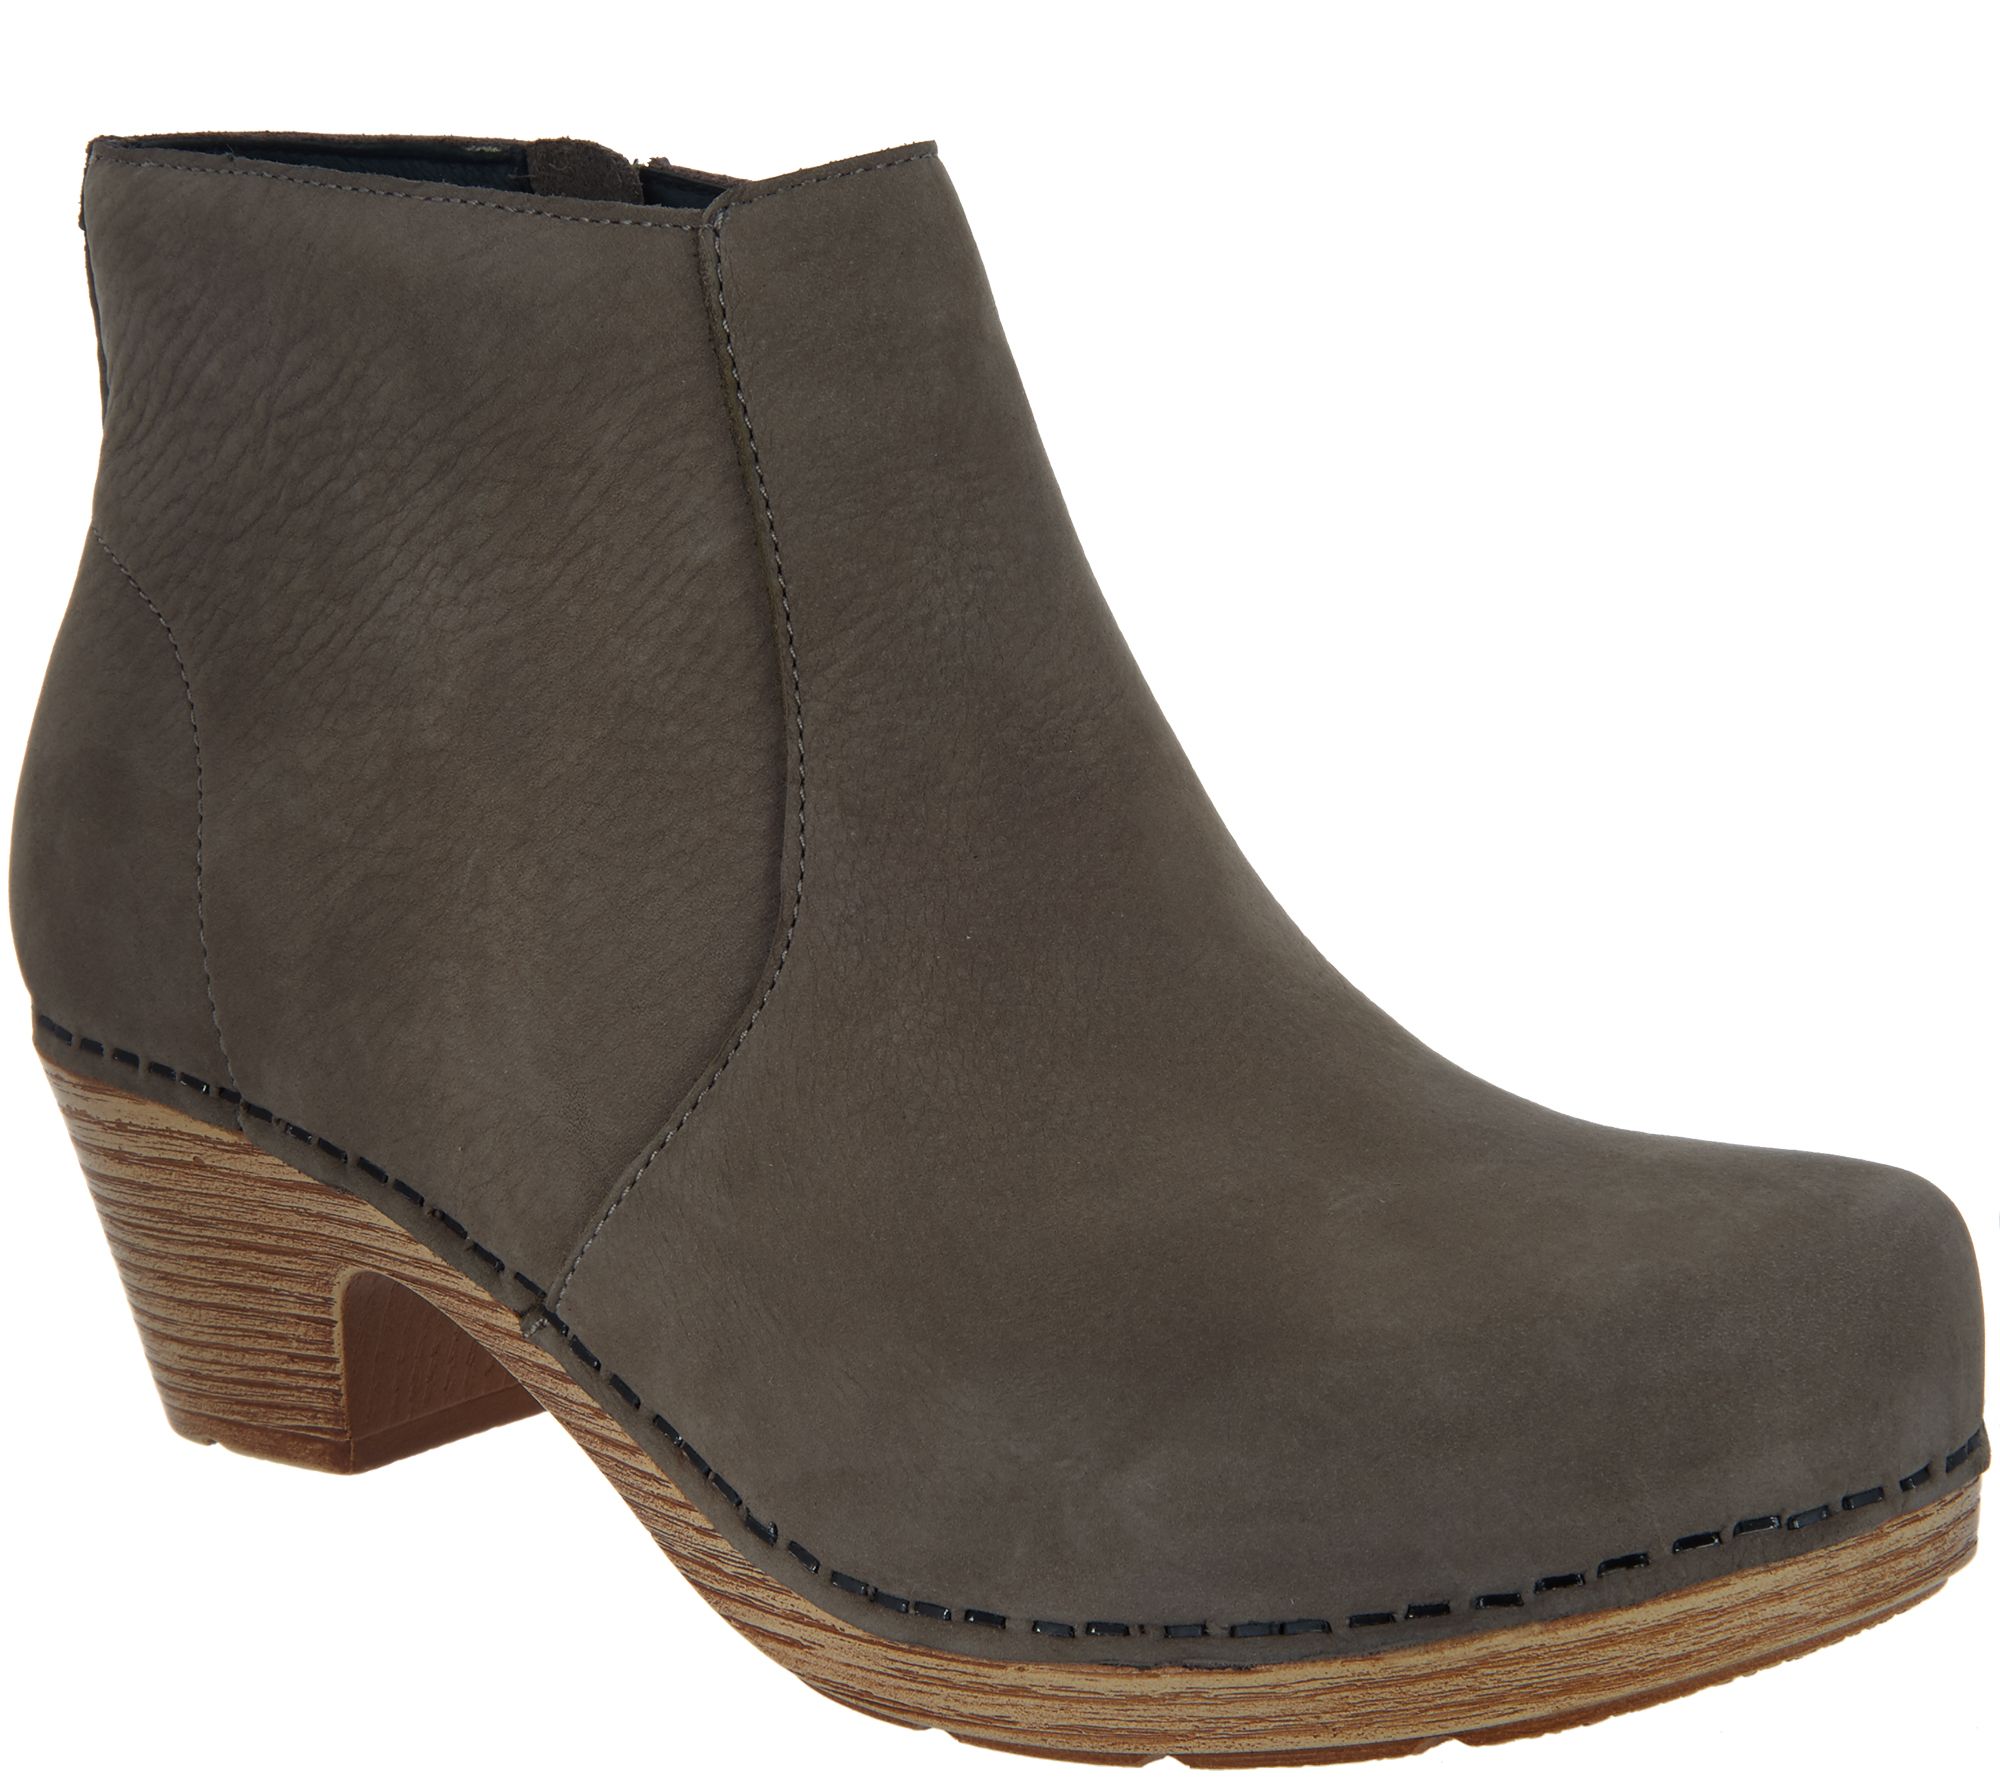 Dansko Nubuck Leather Ankle Boots - Maria - QVC.com